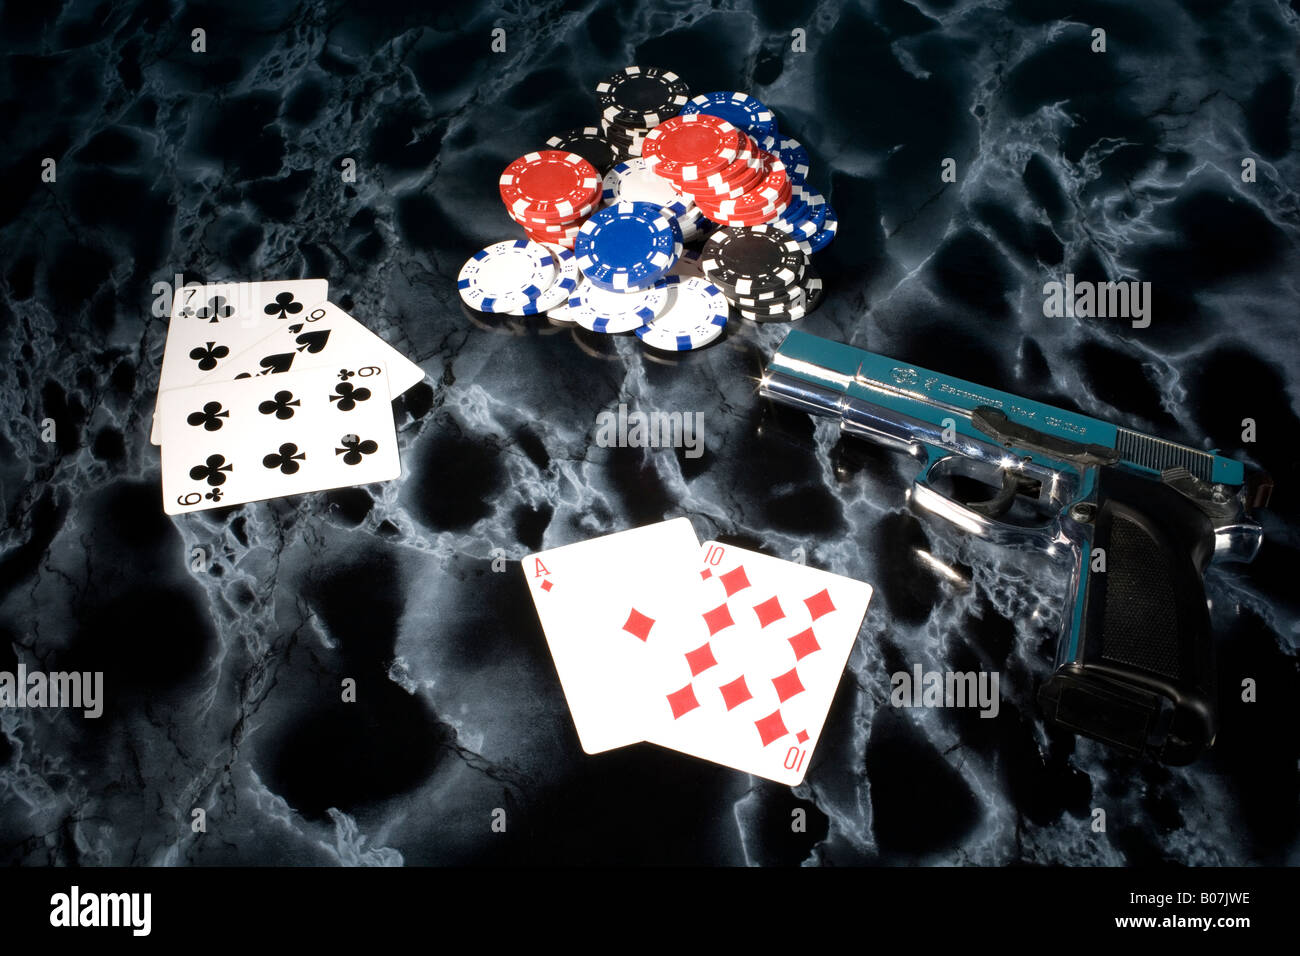 Black Jack Kartenspiel Siebzehnundvier card game Stock Photo